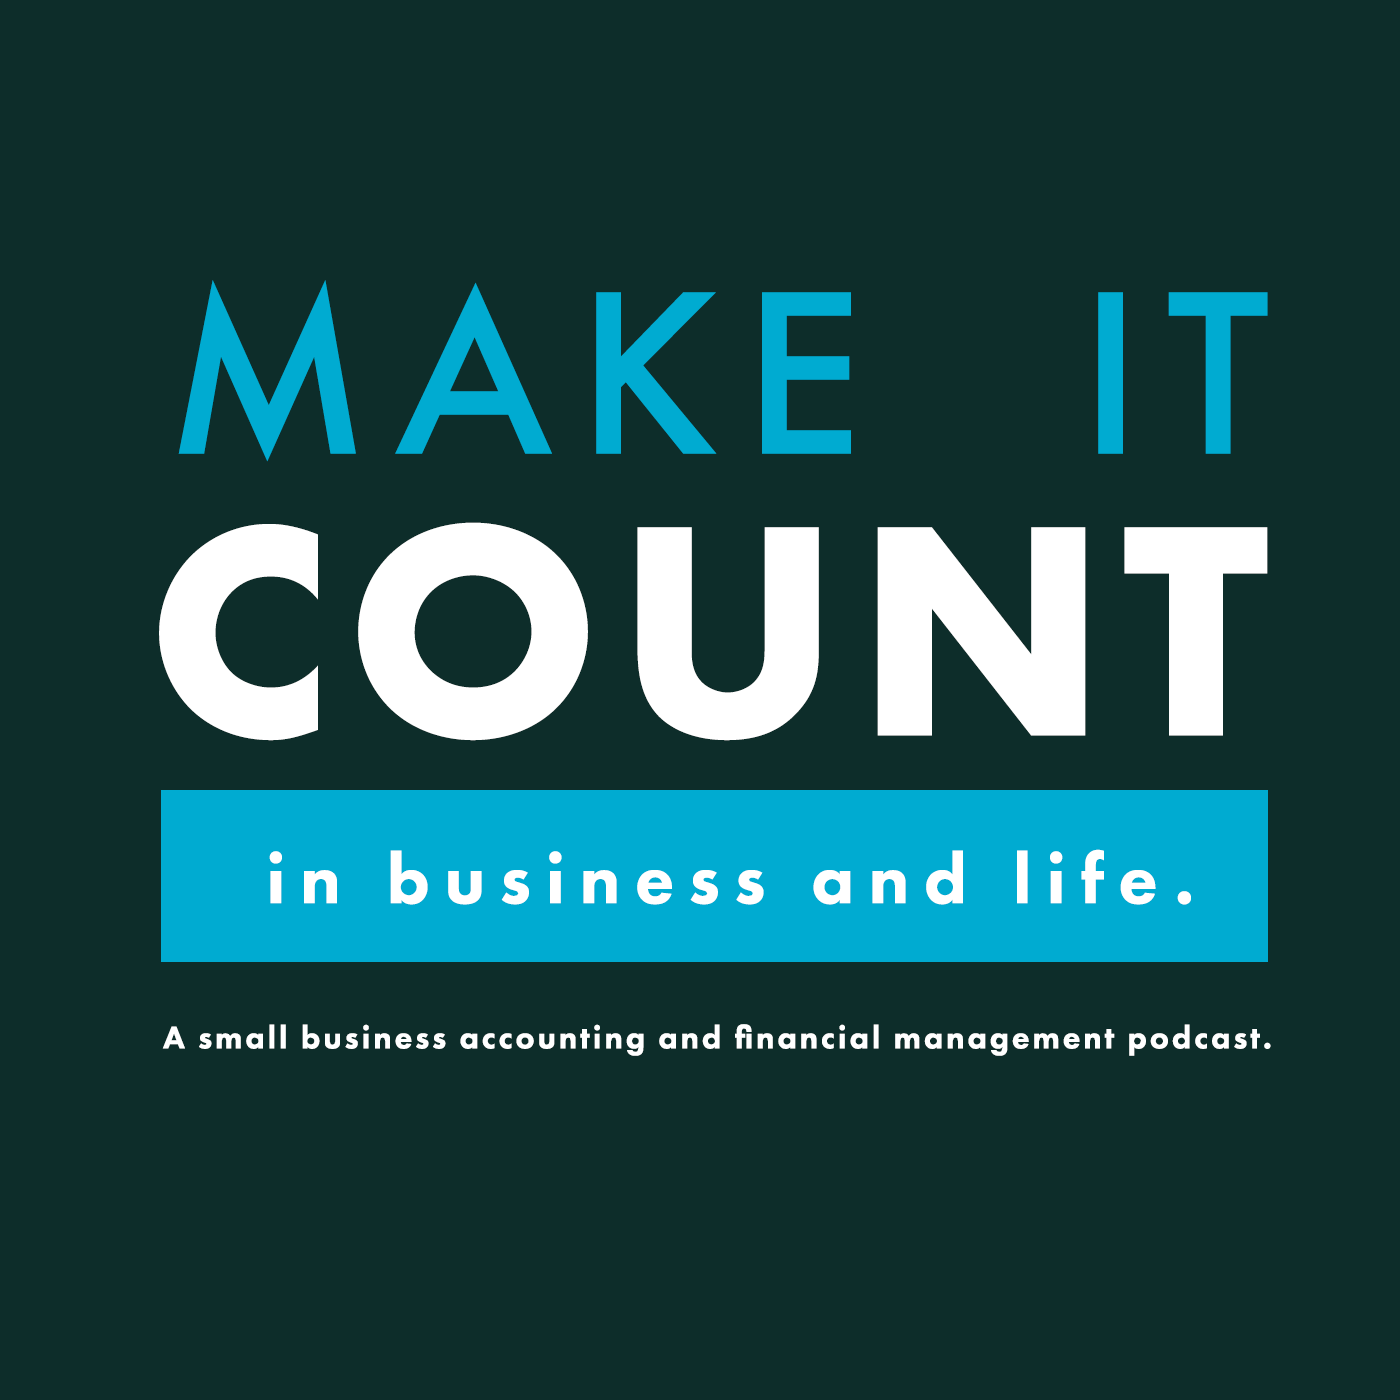 Make it count logo